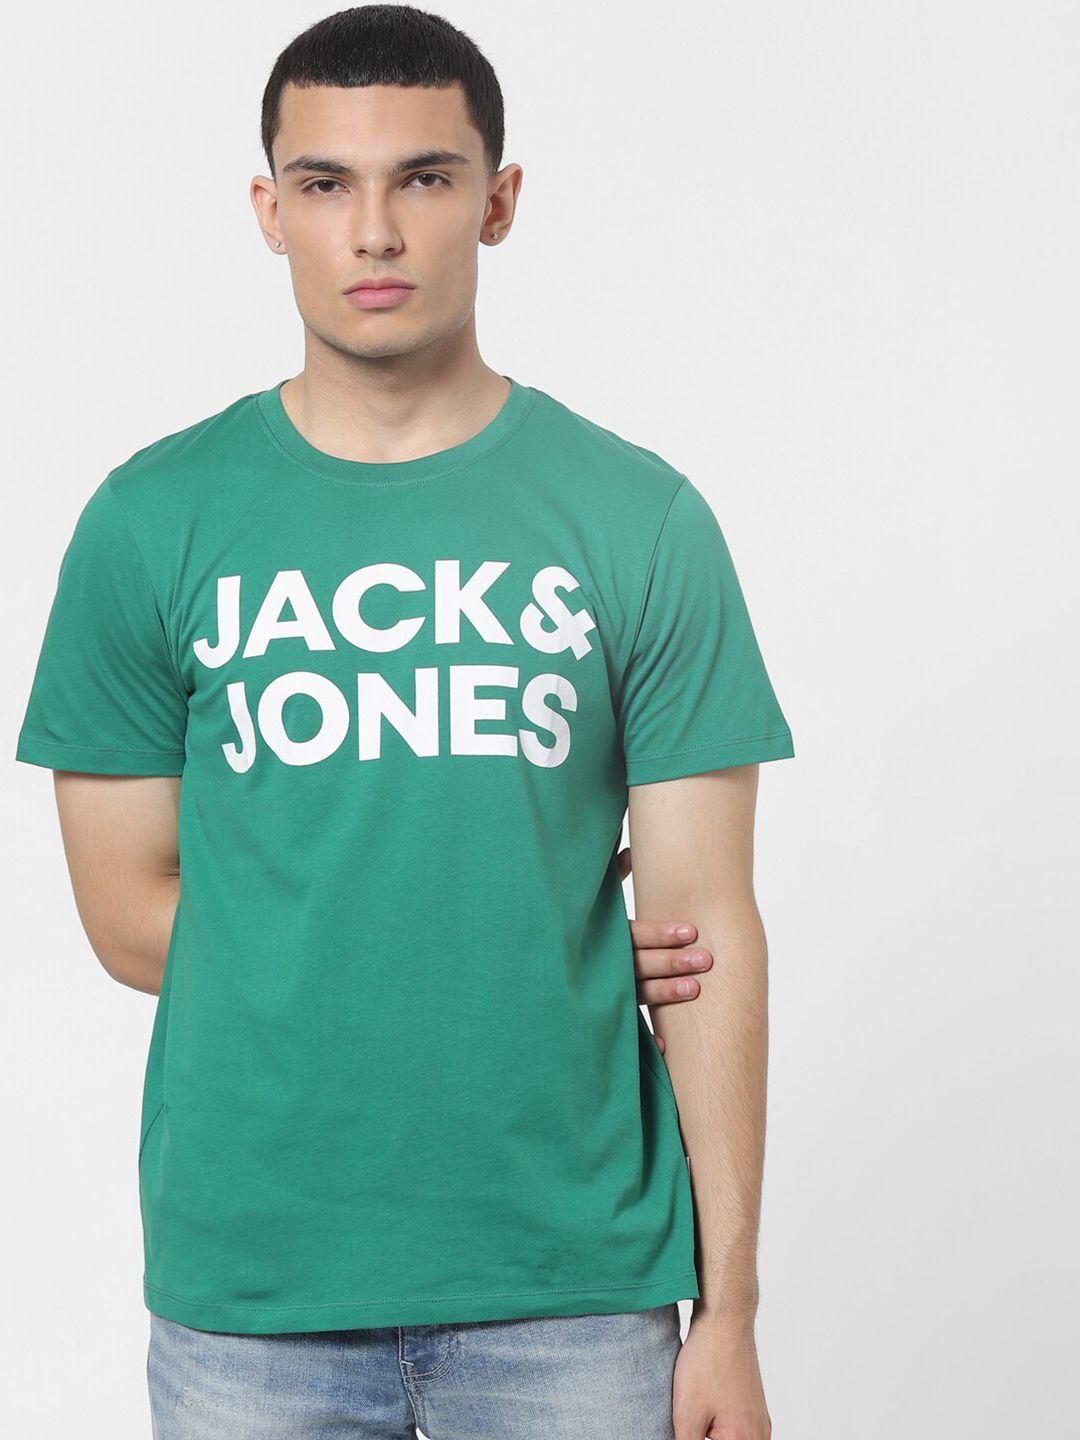 jack & jones men green & white typography printed slim fit t-shirt